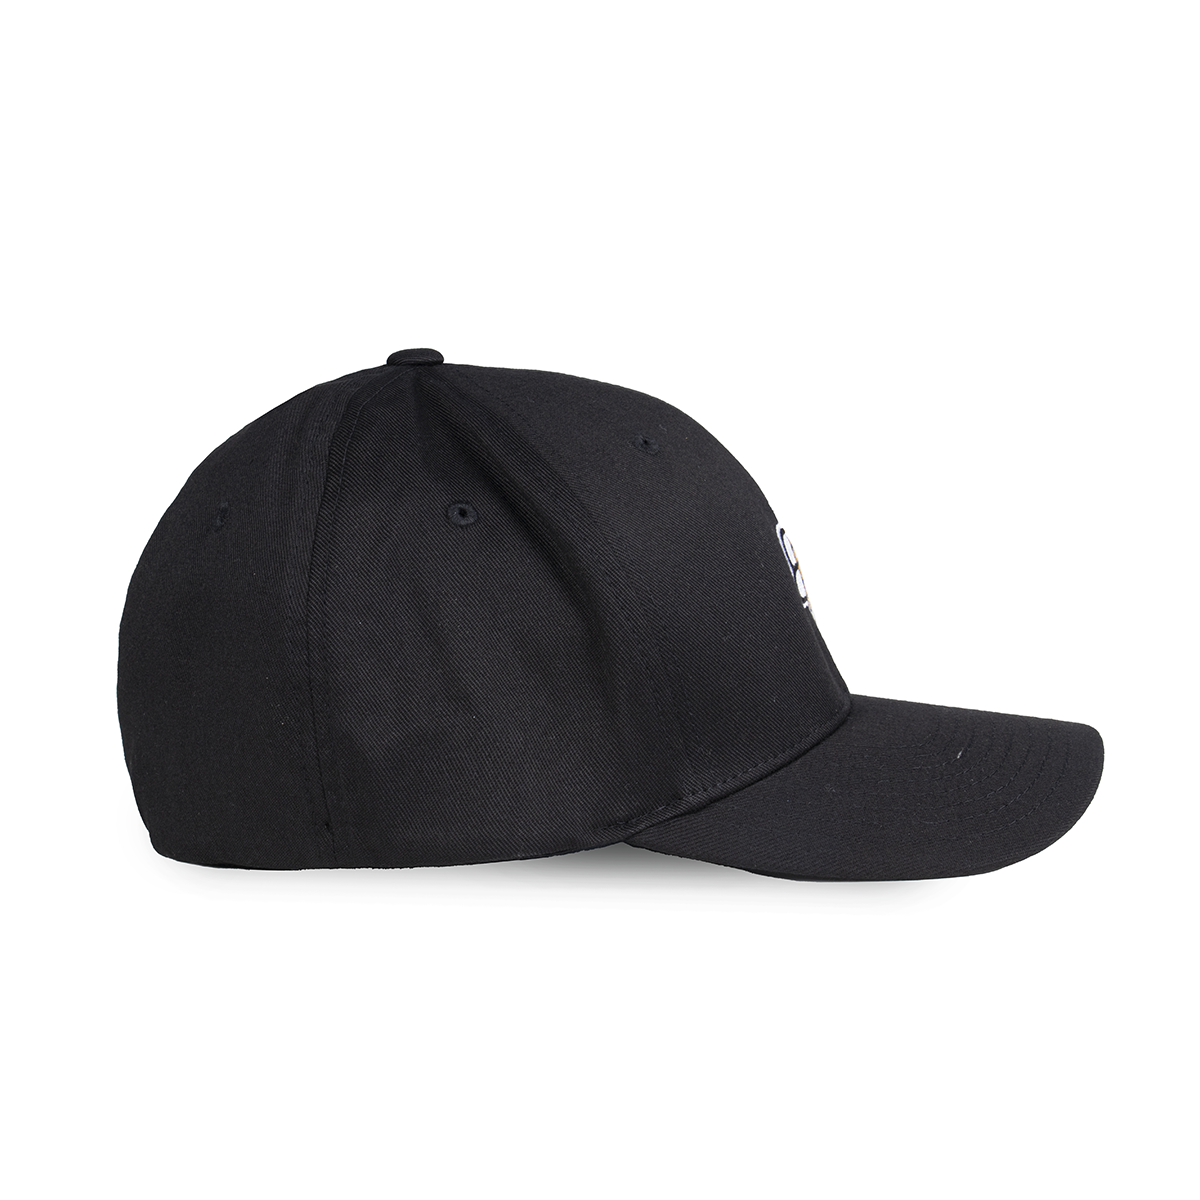 The Bee Flex Hat - Black Small / Medium